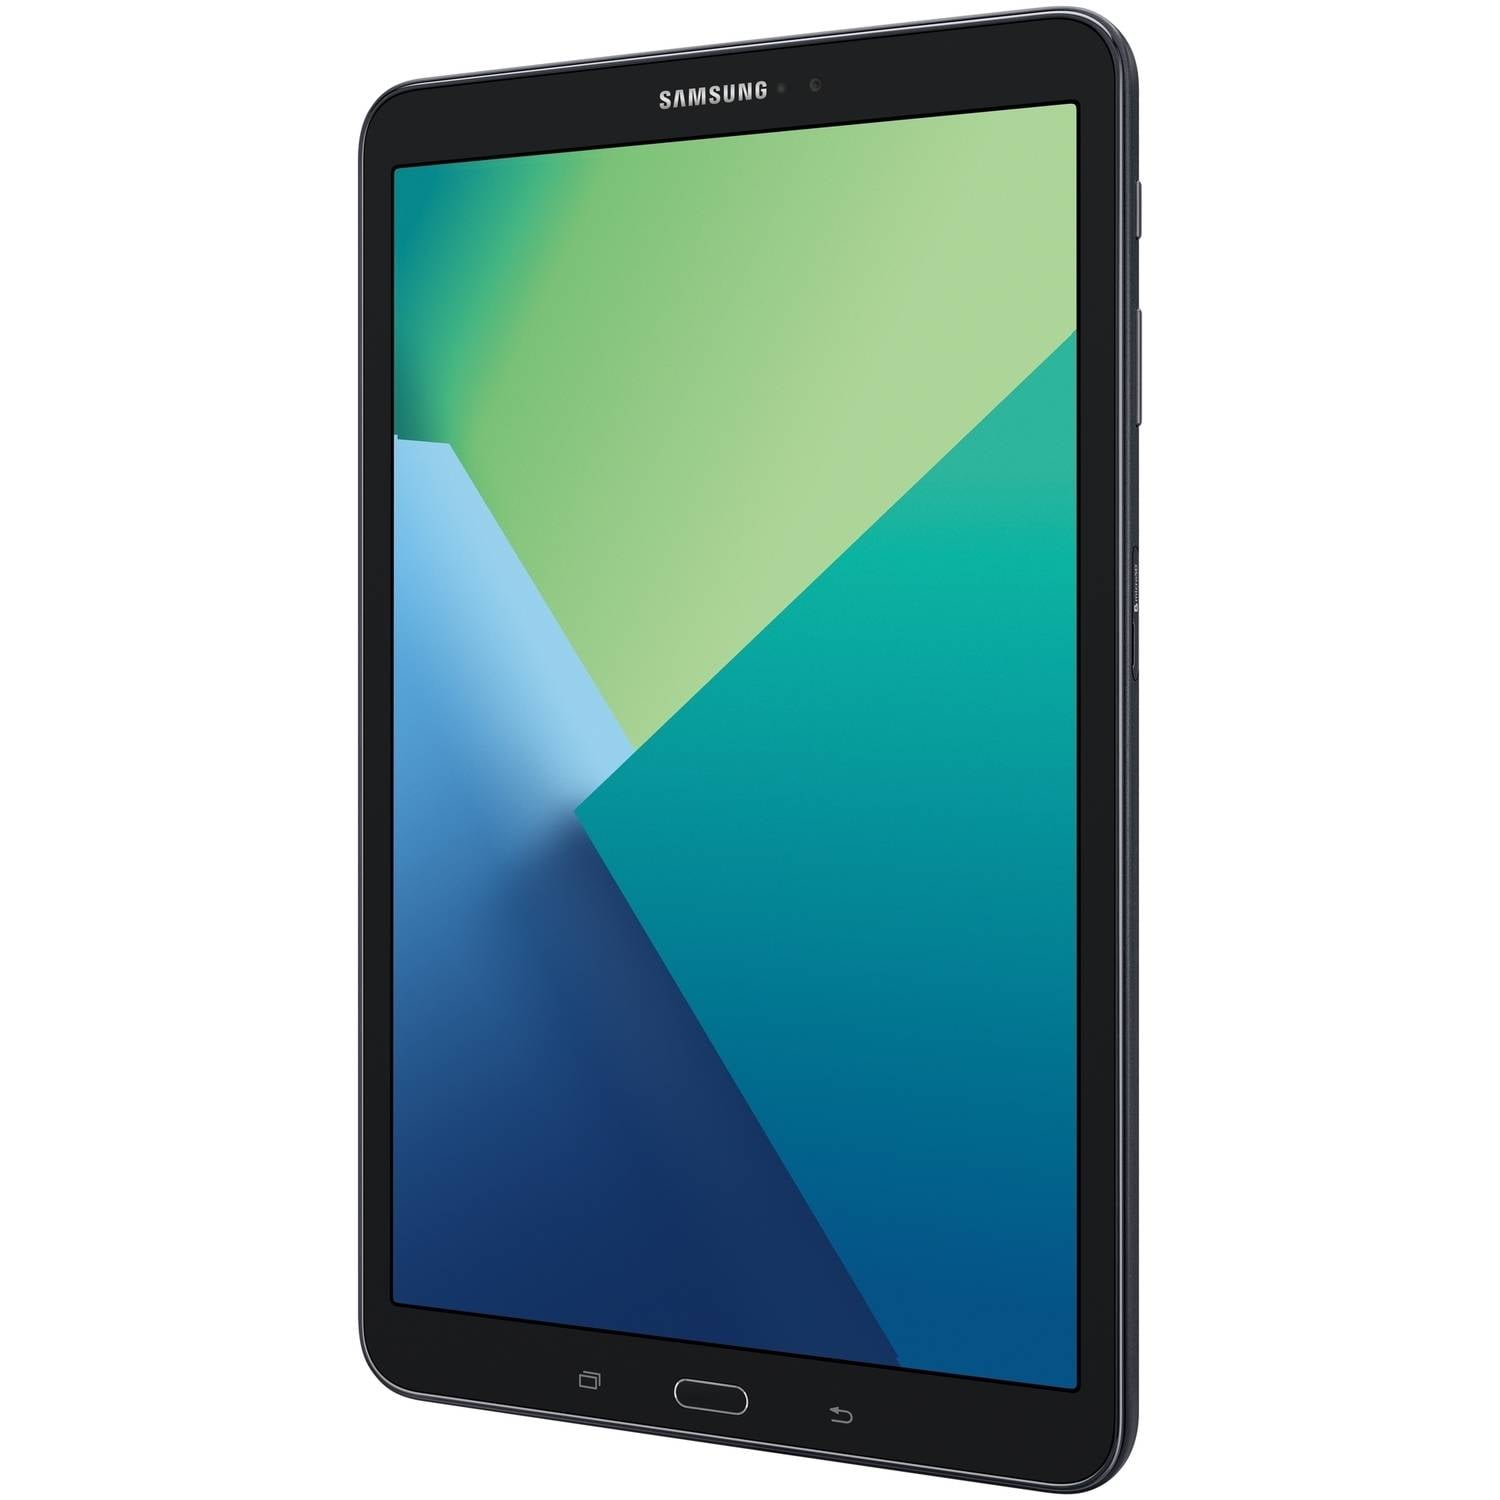 Assert Marine excuus Samsung Galaxy Tab A 10.1 Tablet 16GB S Pen, Bluetooth - Black (SM-P580NZKAXAR)...  - Walmart.com